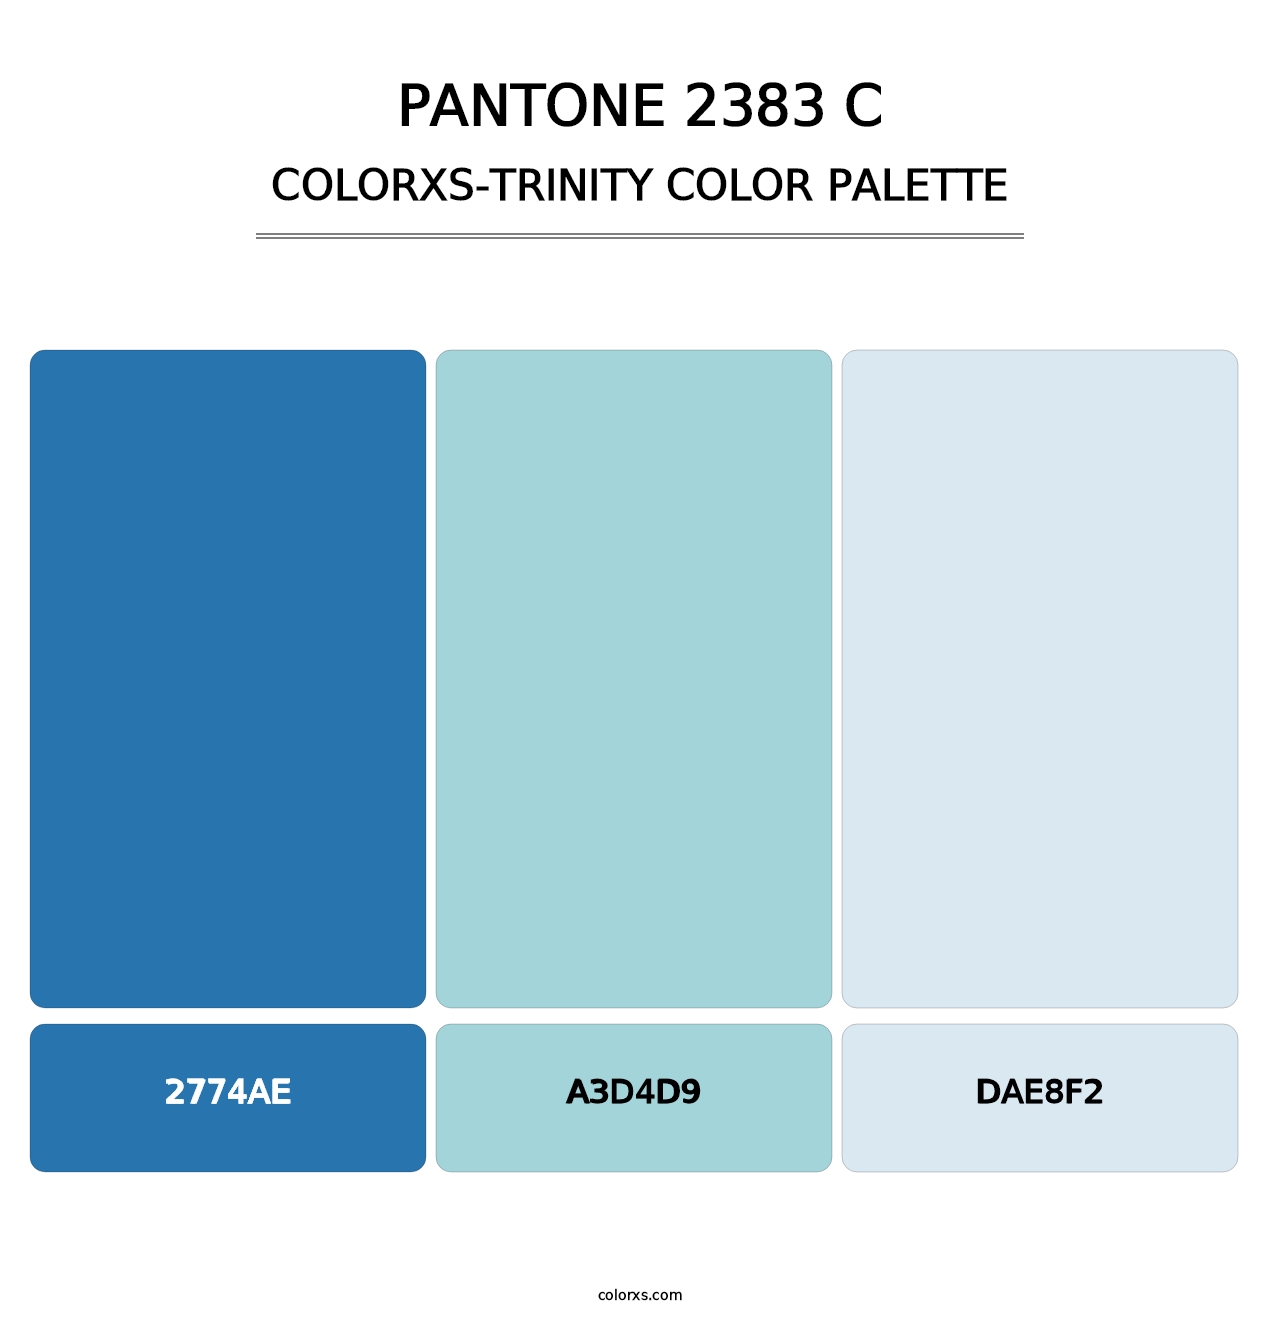 PANTONE 2383 C - Colorxs Trinity Palette